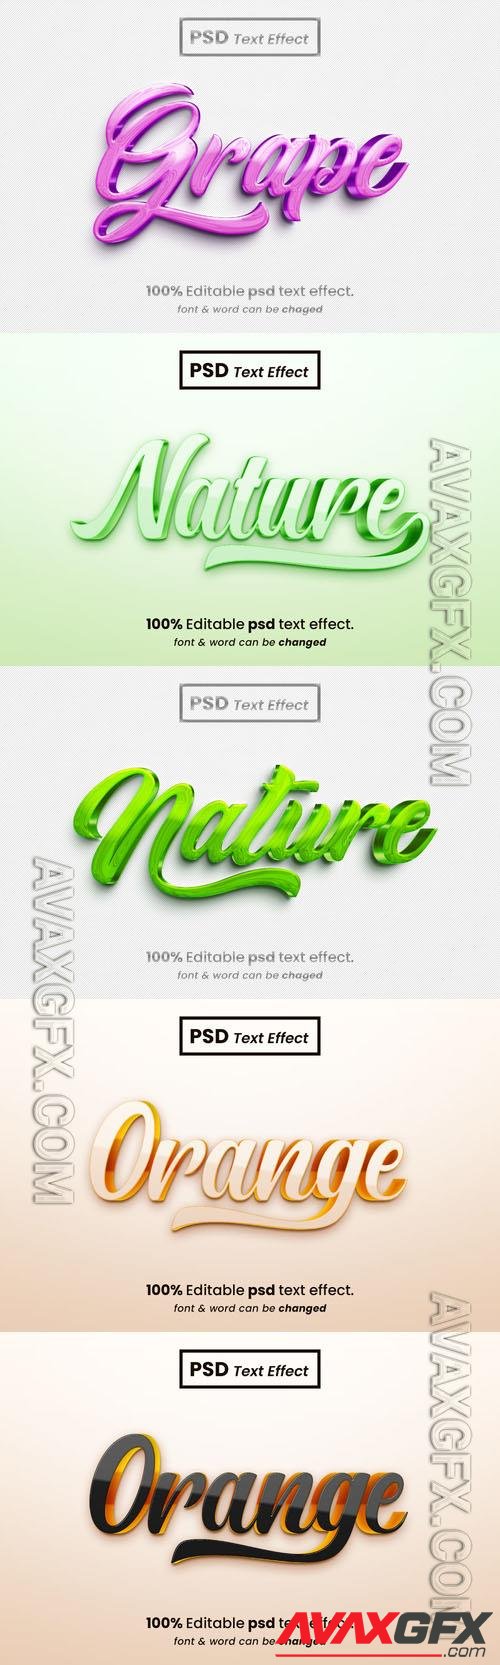 Psd style text effect editable design  set vol 326 [PSD]